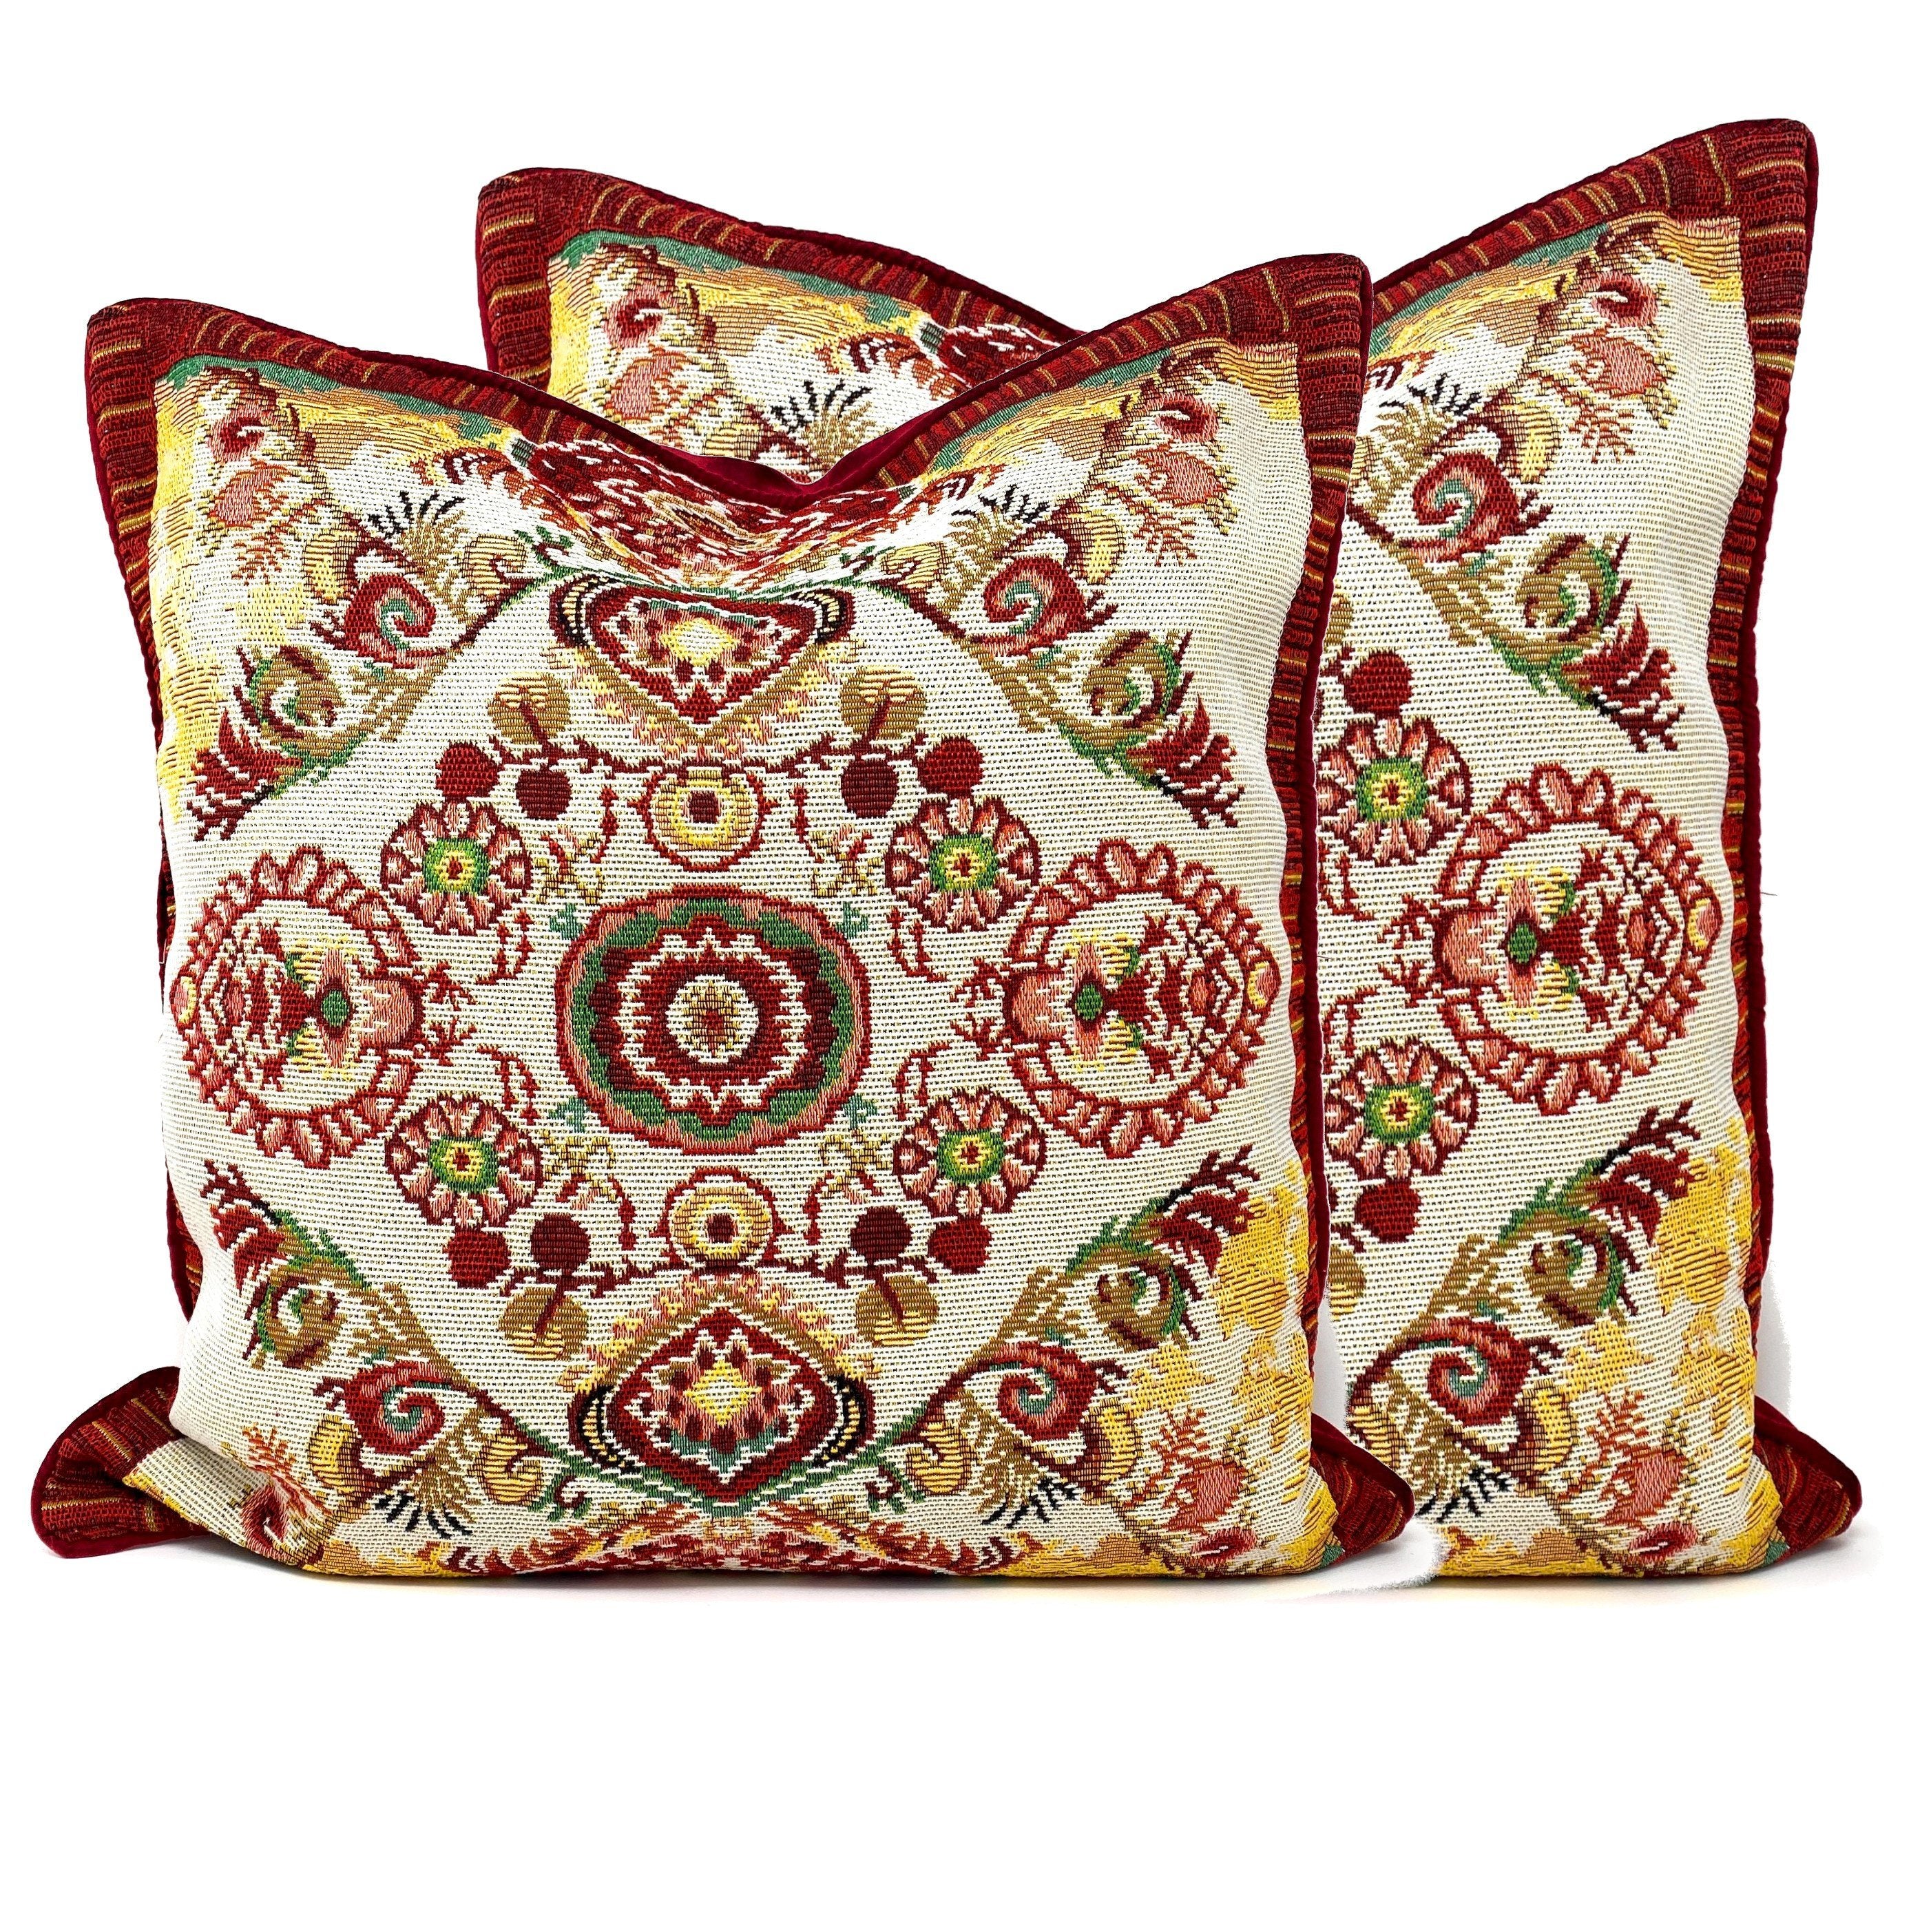 Tache Elegant Burgundy Ornate Paisley Woven Tapestry Throw Pillow Cover (18194) - Tache Home Fashion